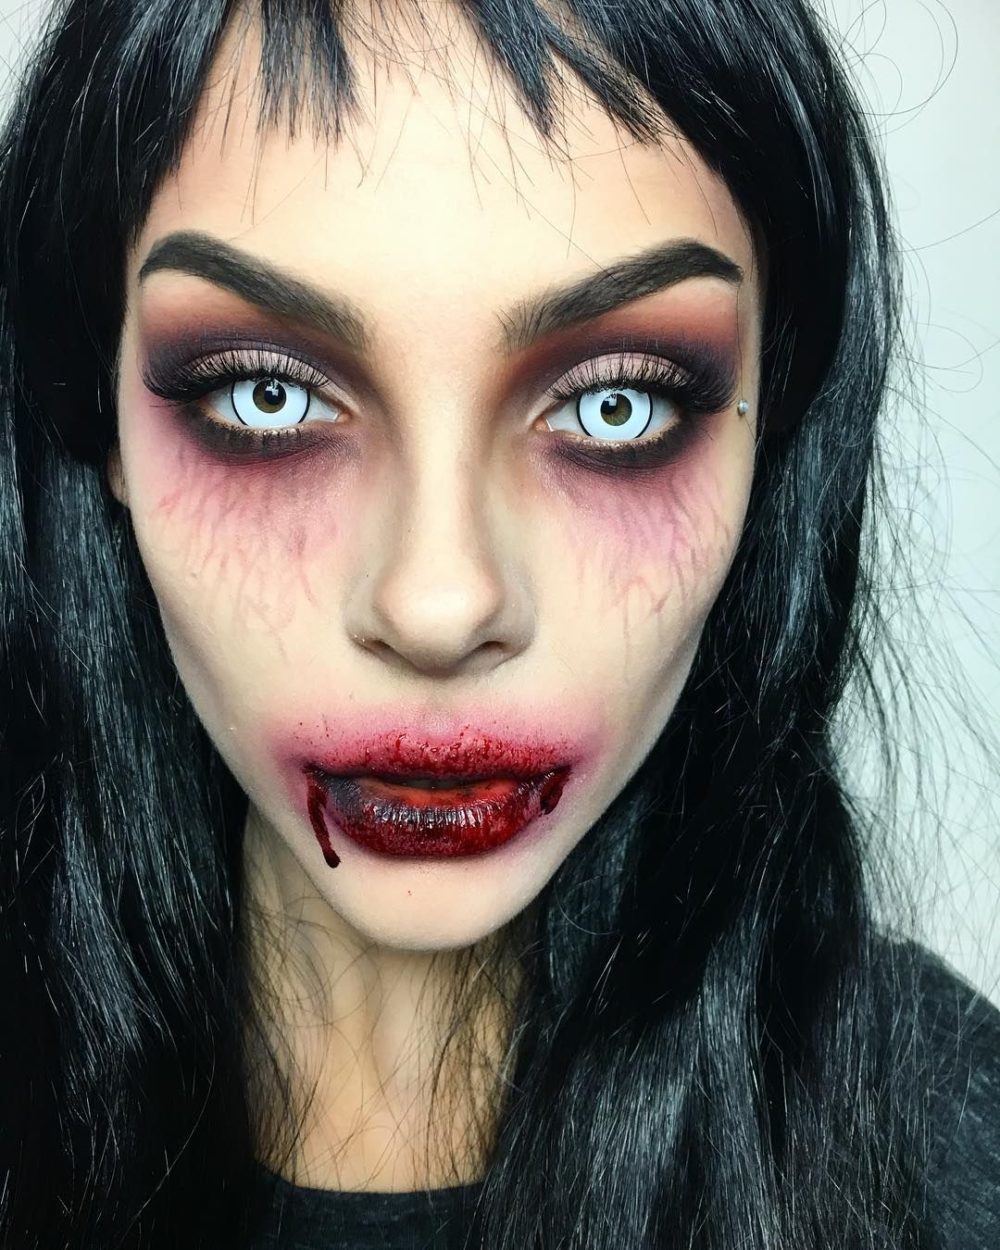 Maquillage vampire : conseils et inspirations pour Halloween